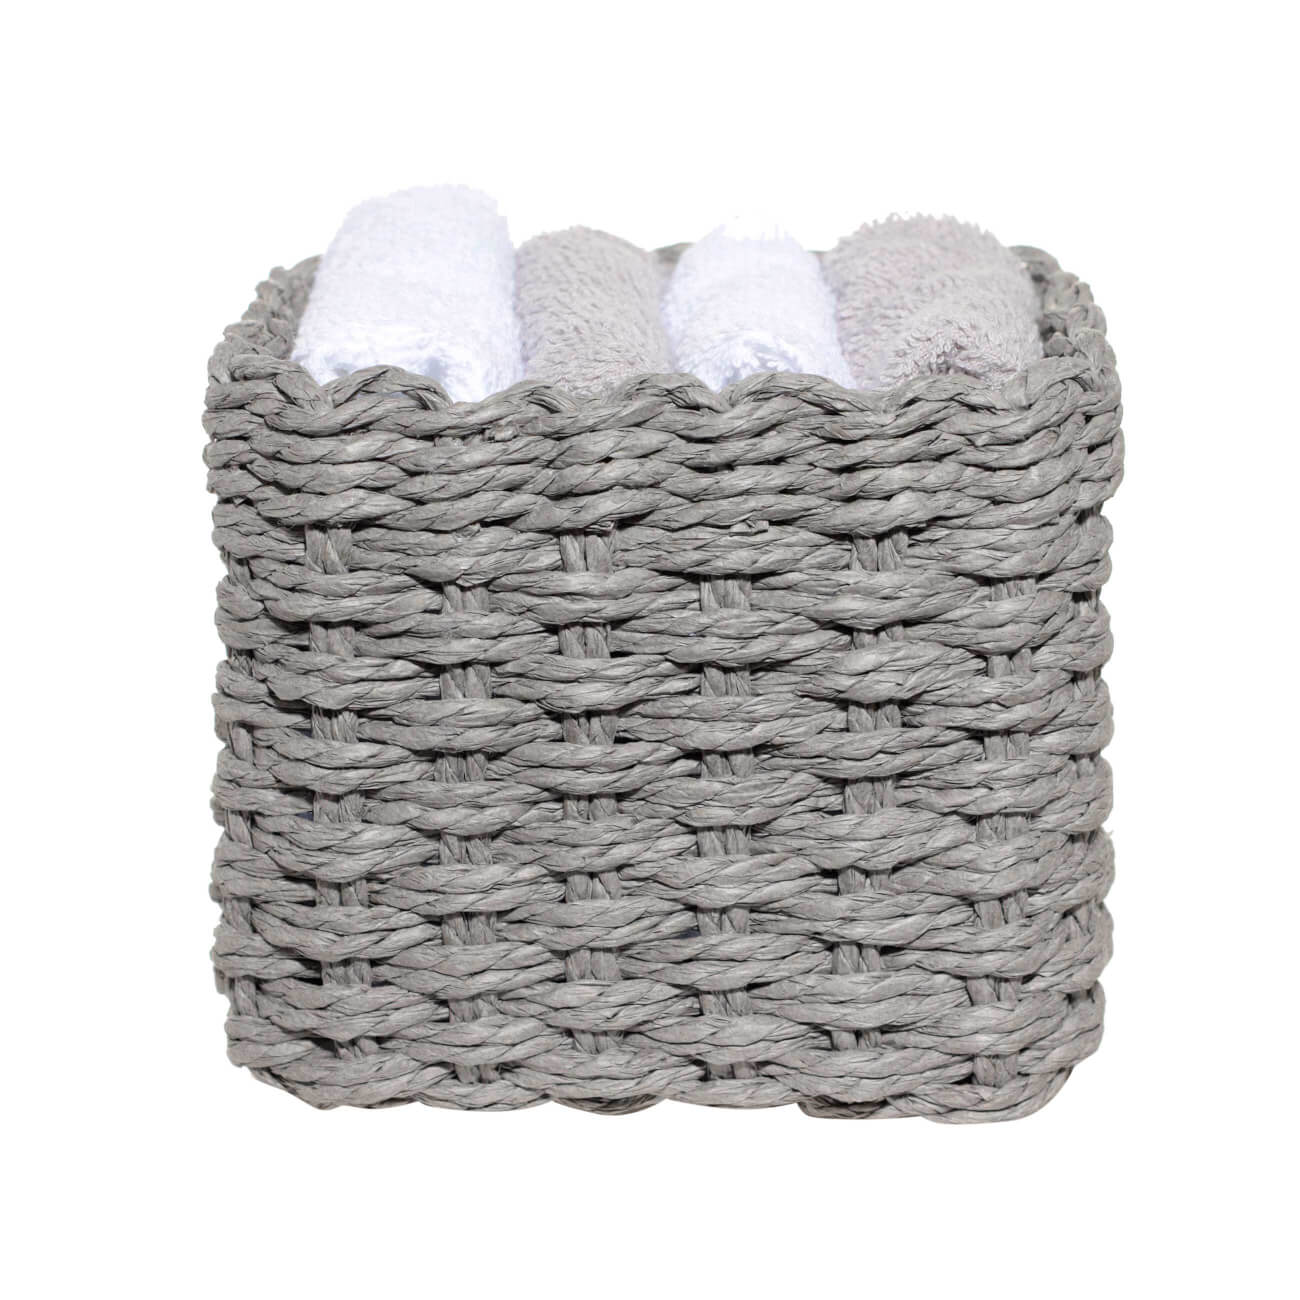 Towel, 30x30 cm, 4 pcs, in a basket, cotton / cellulose, gray / white, Basket towel изображение № 1